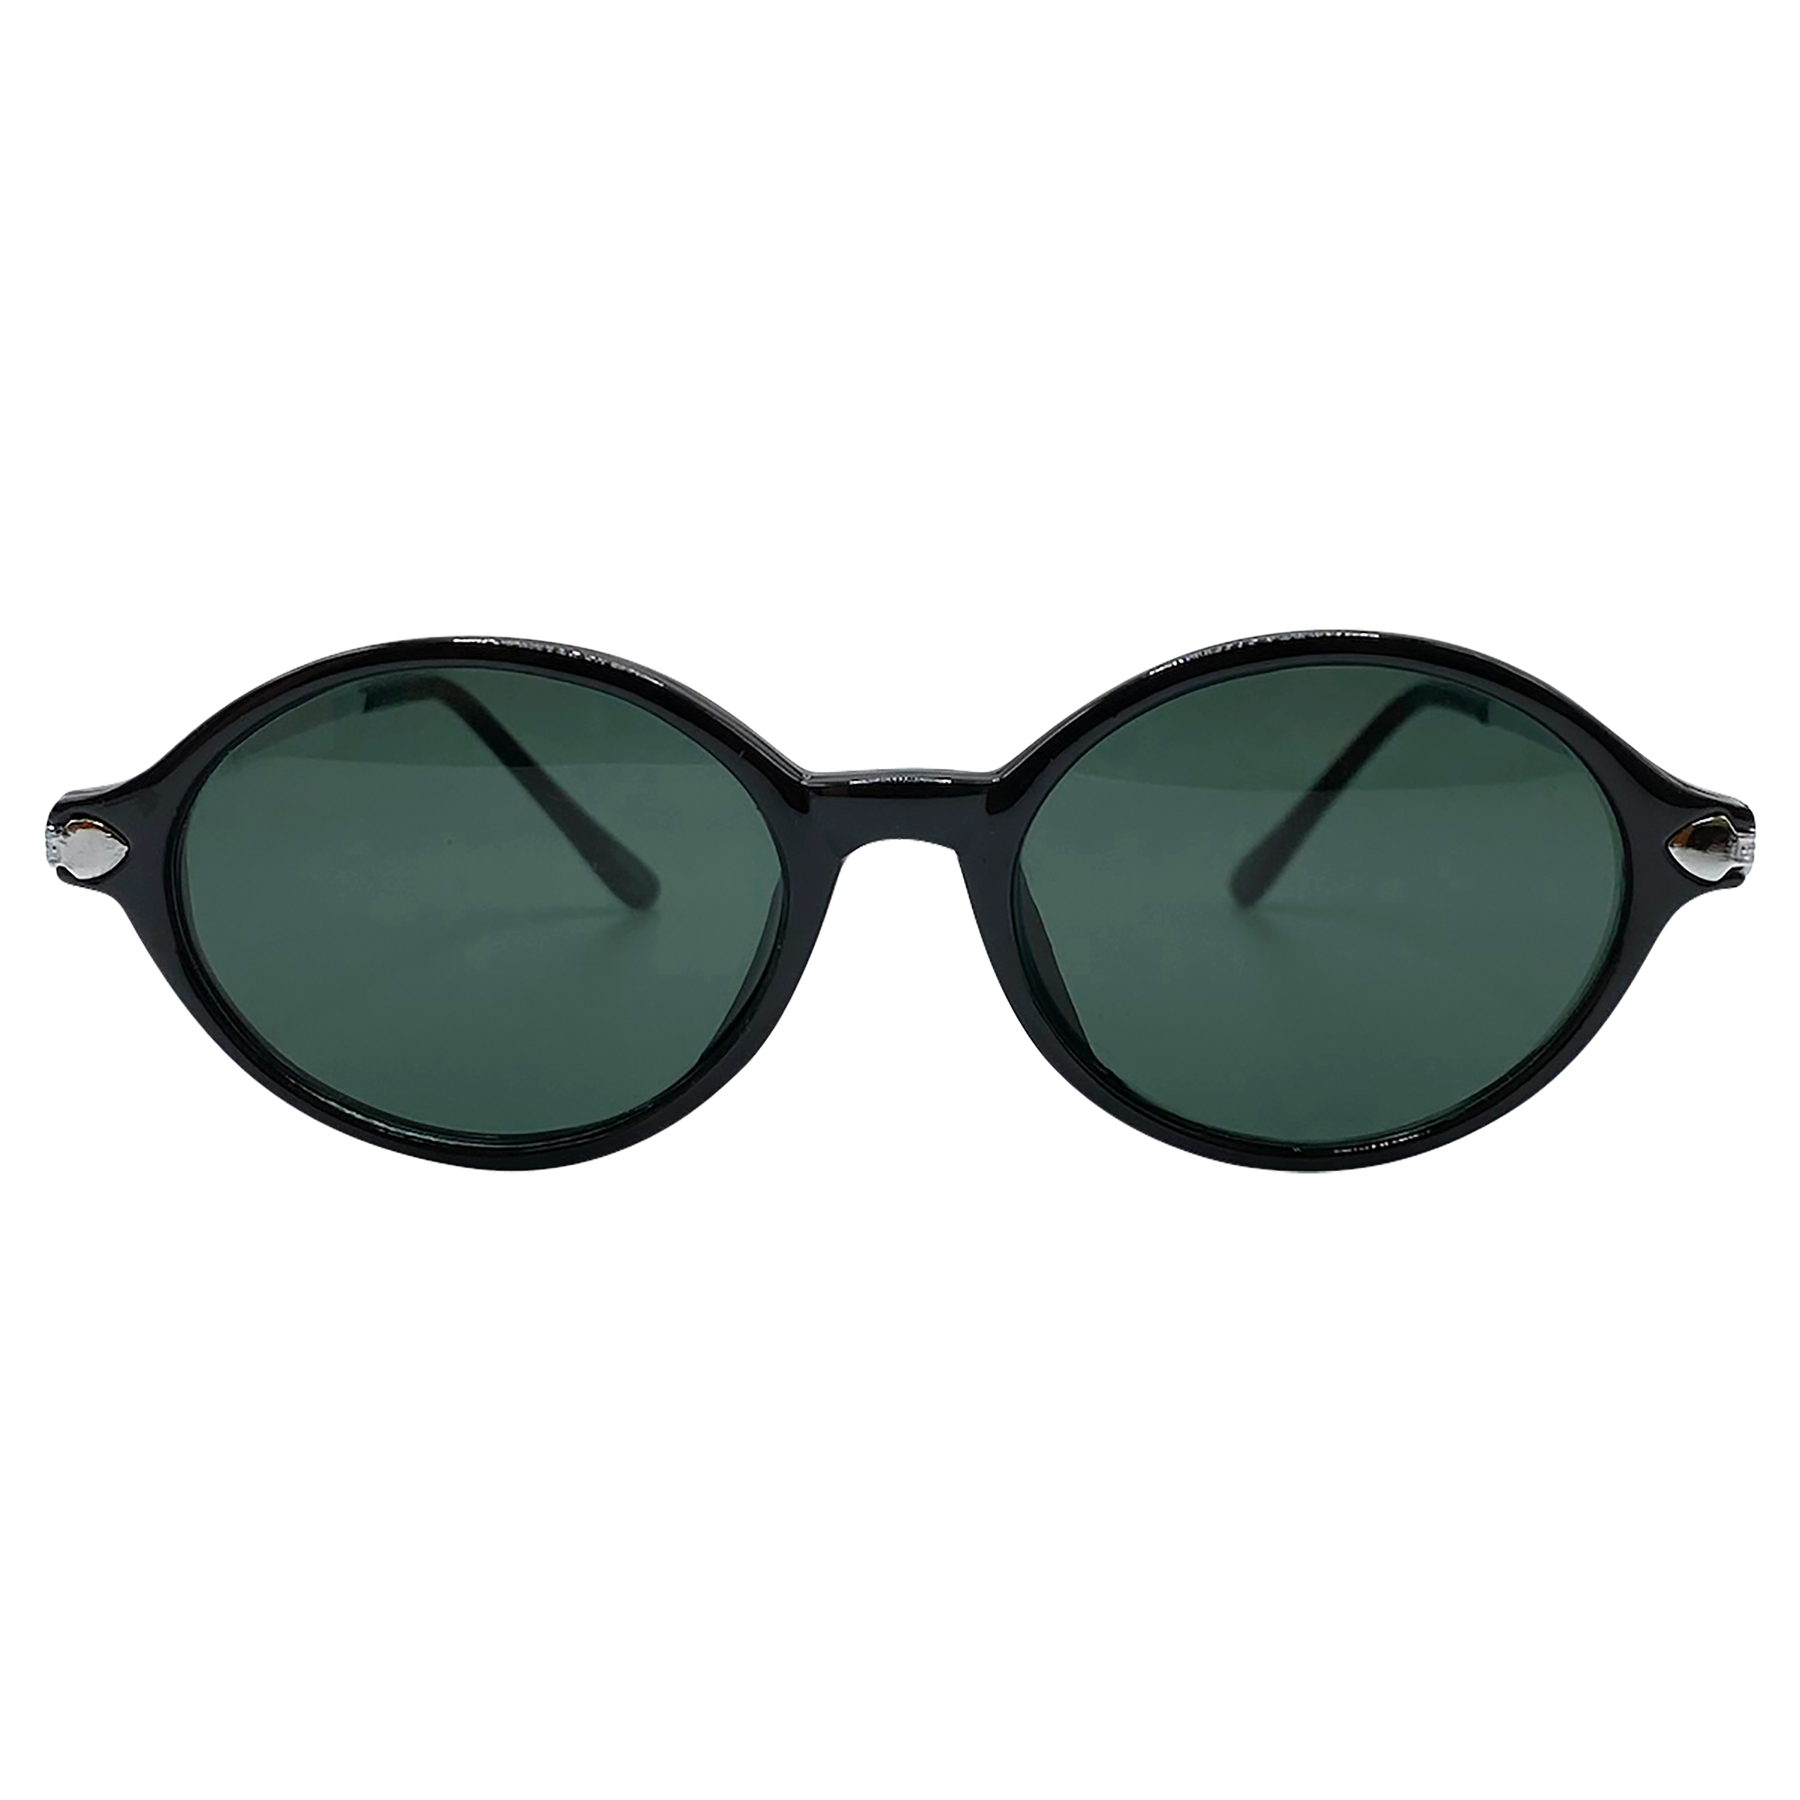 BEAN Black/Silver Oval Sunglasses